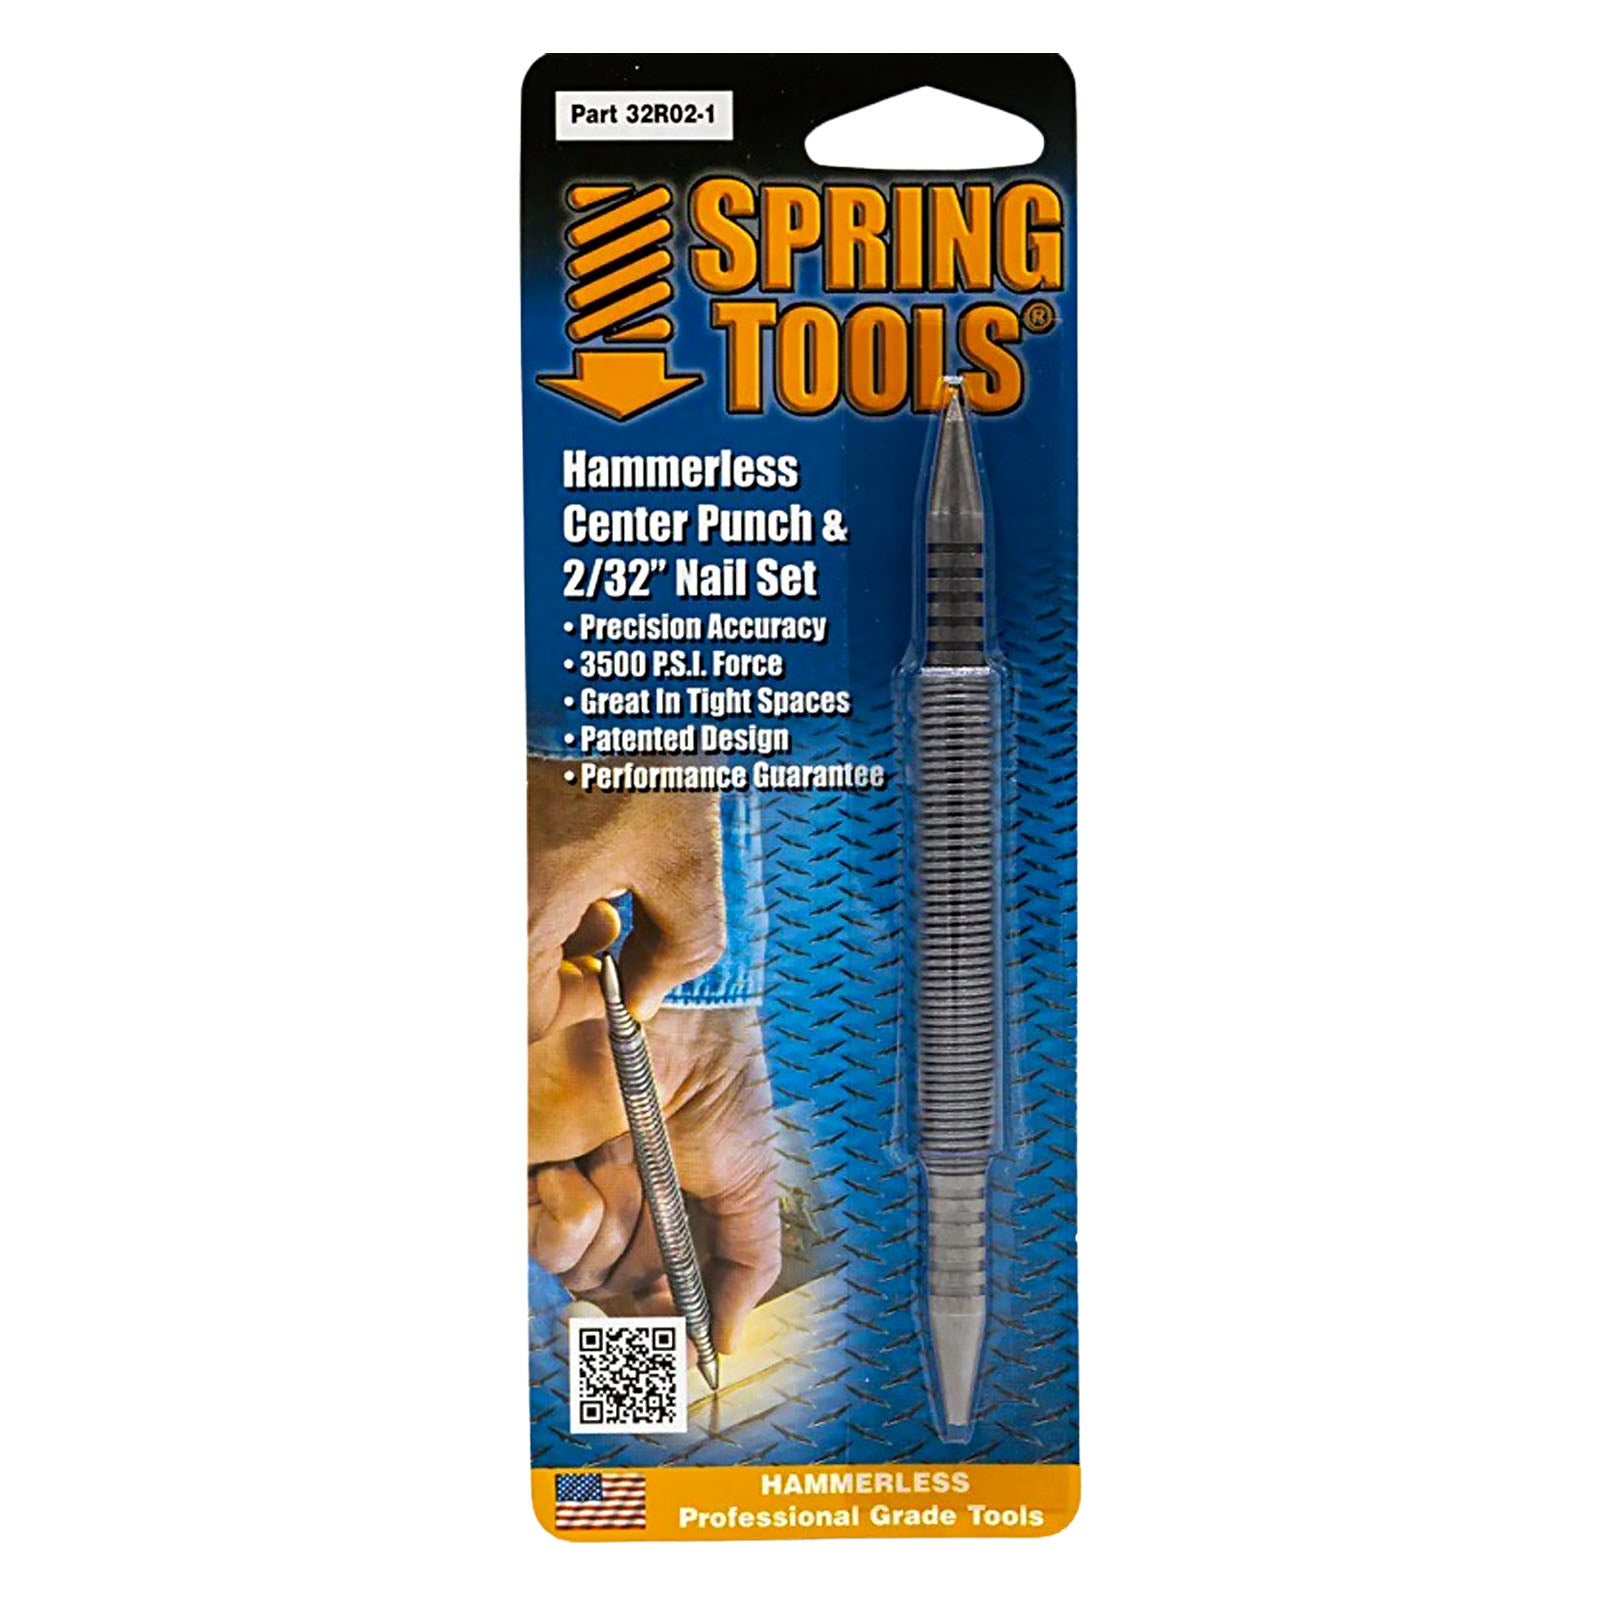 Spring Tools 32R02-1 Hammerless 2/32" Nail Set & Center Punch